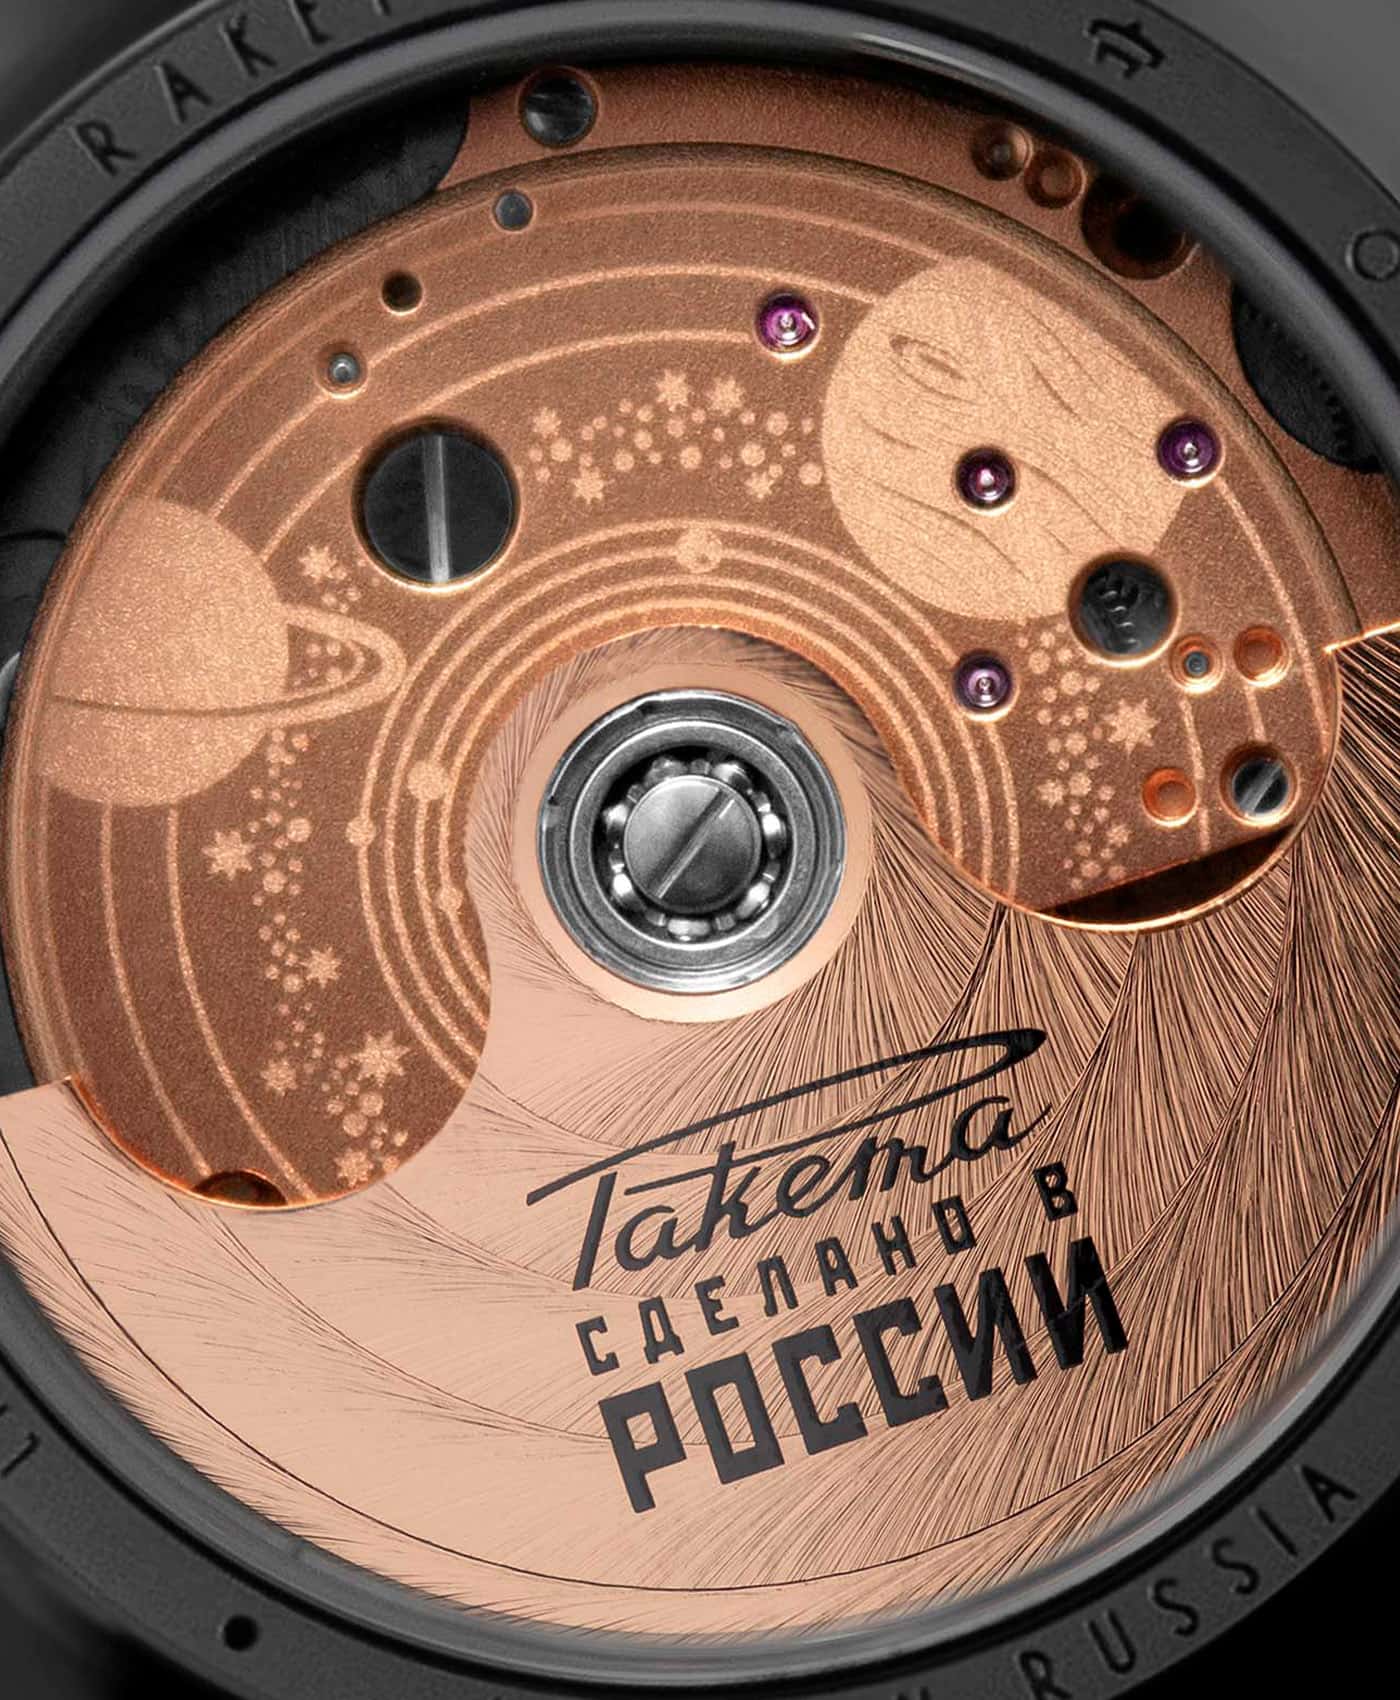 Raketa - Copernicus - 0280 - Limited Edition - Watch movement close up